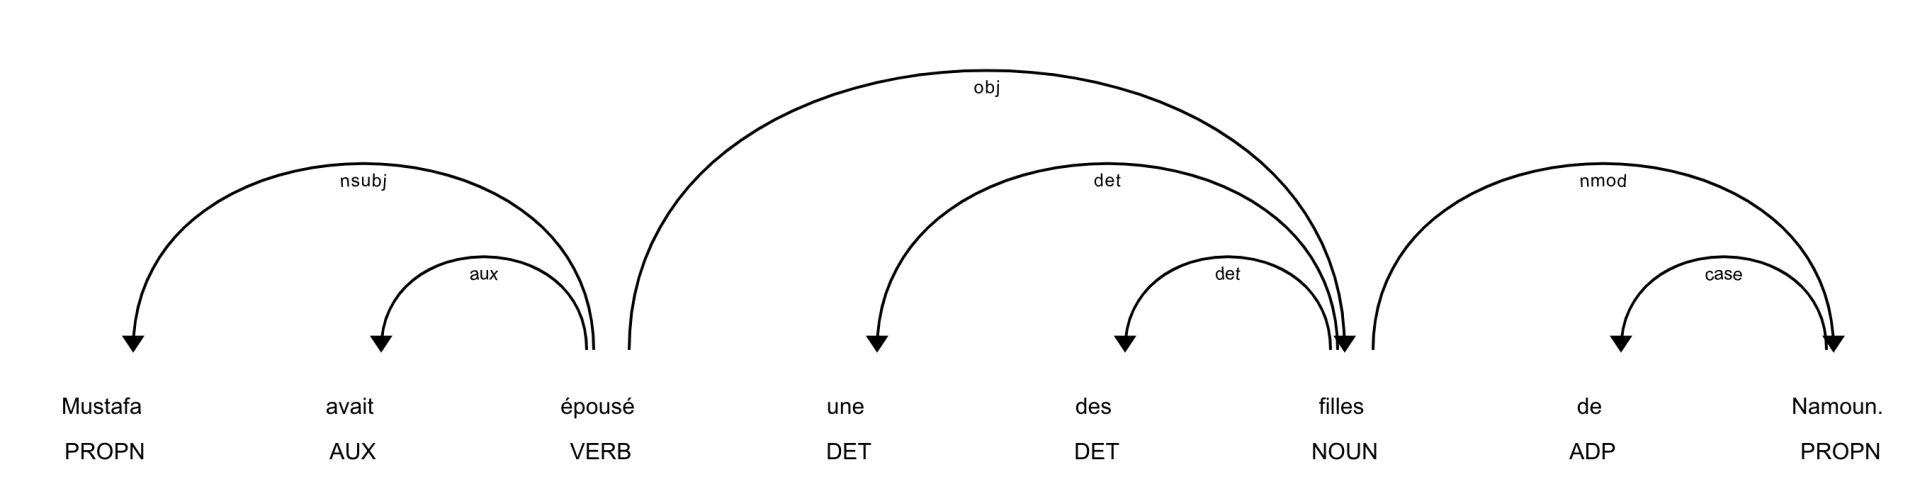 Sentence parse tree